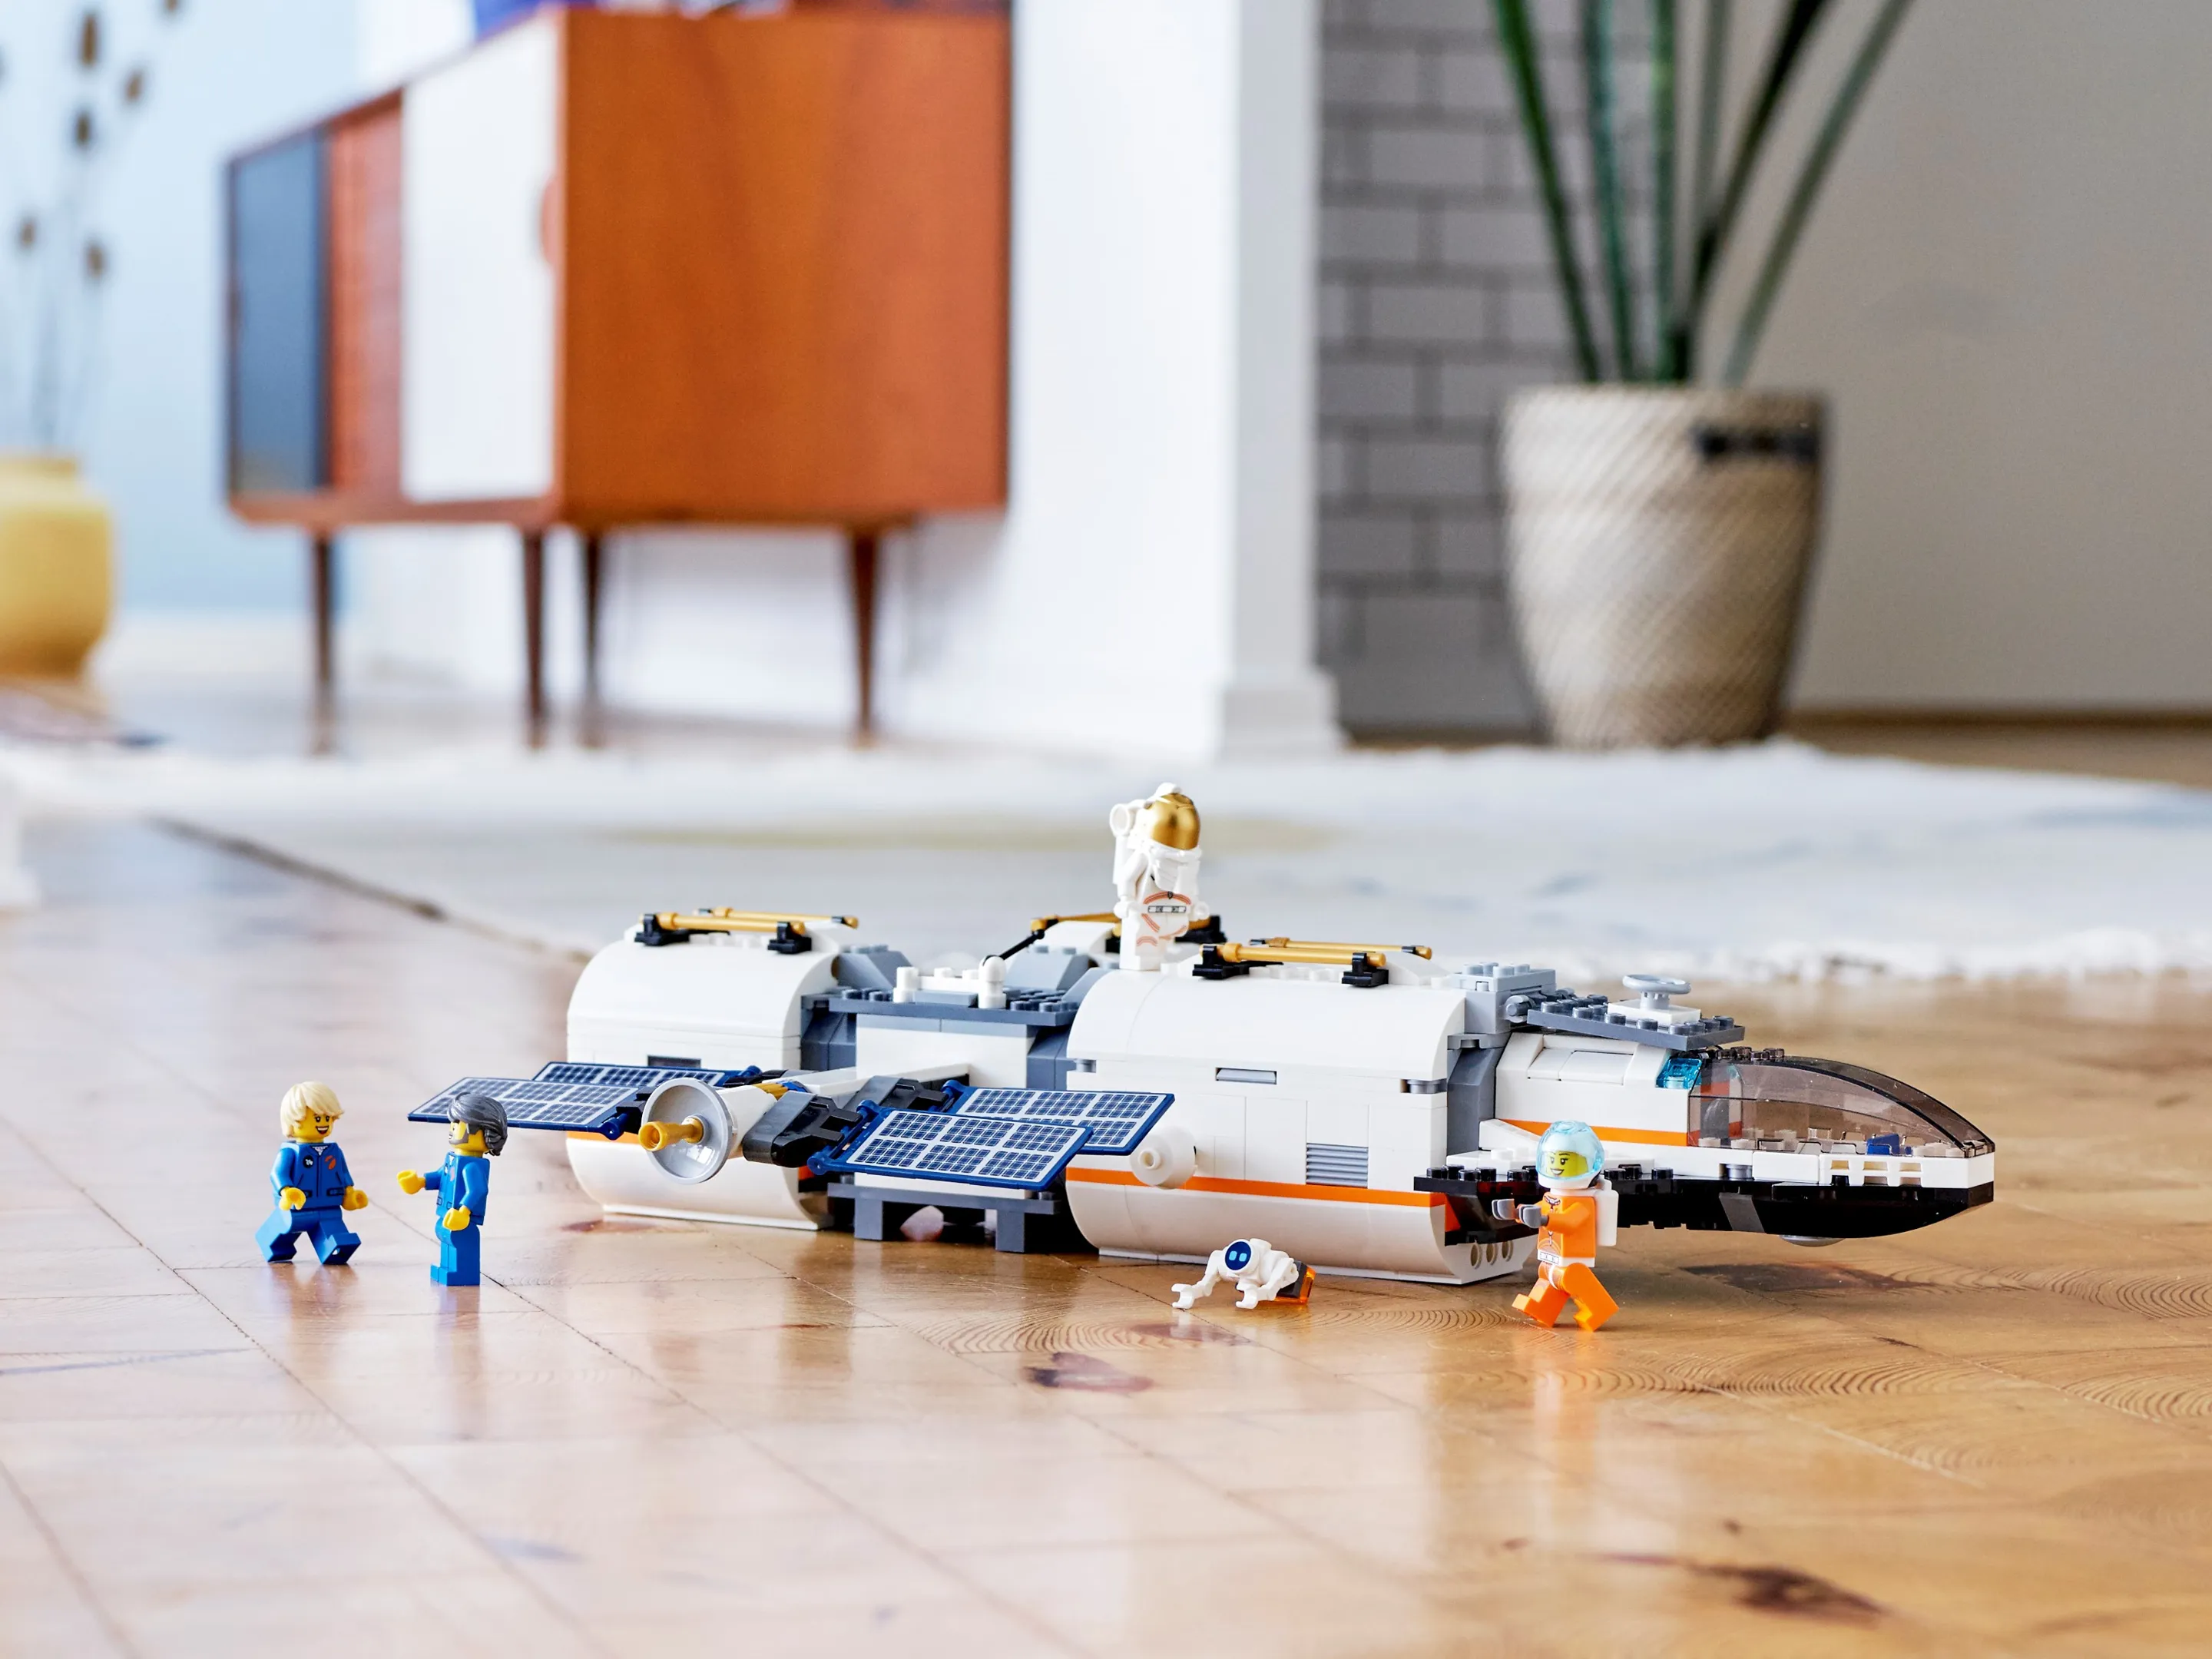 LEGO City Lunar Space Station • Set 60227 • SetDB